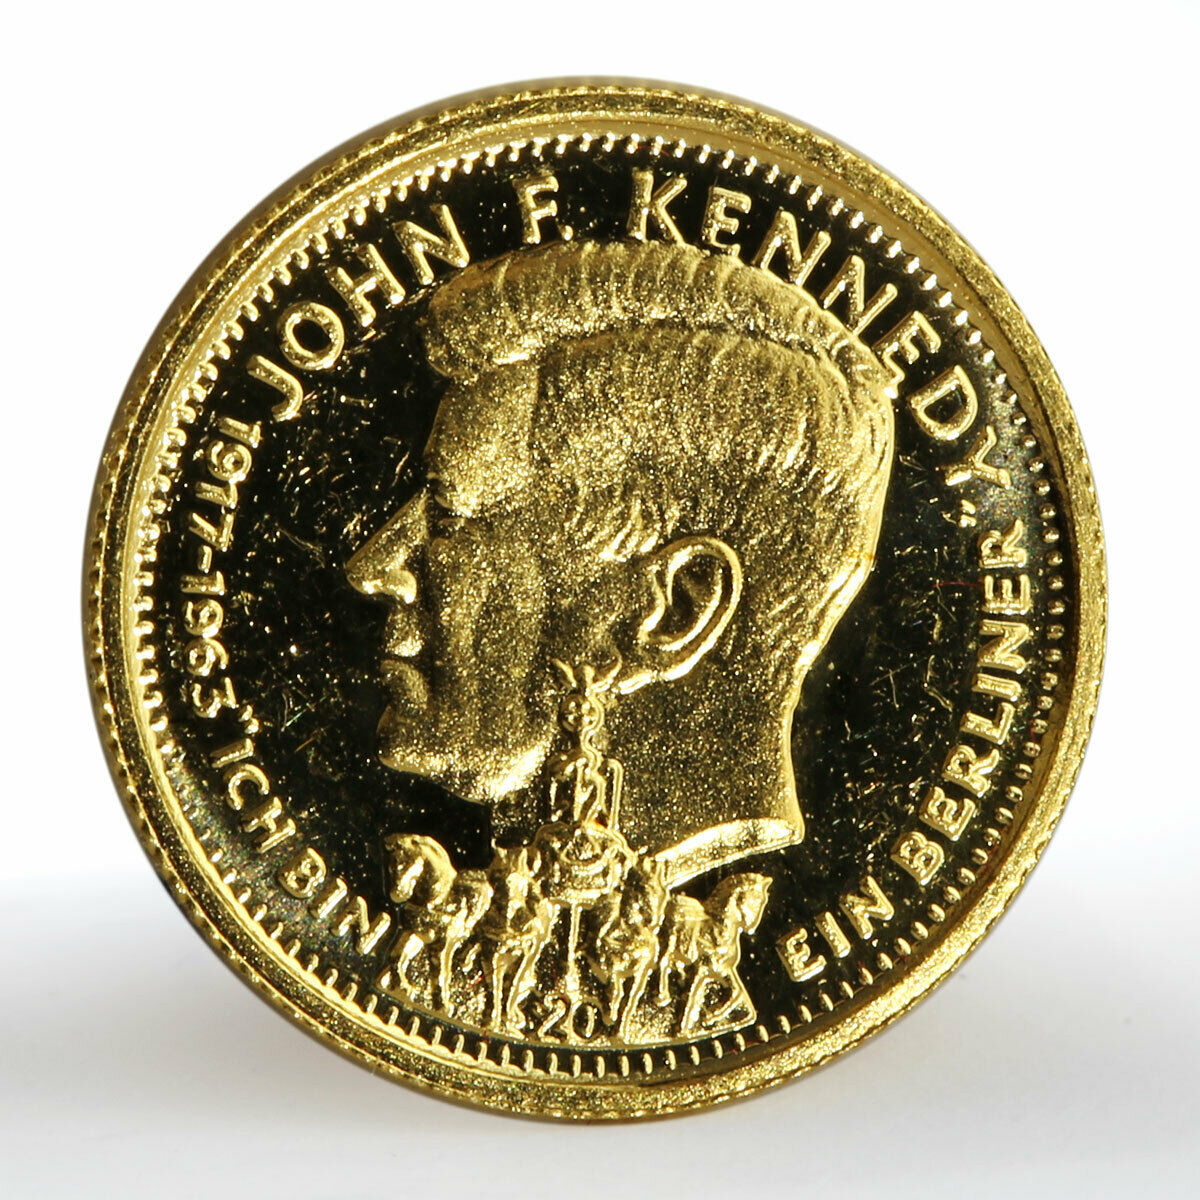 Liberia 20 dollars John F. Kennedy in Berlin proof gold coin 1995